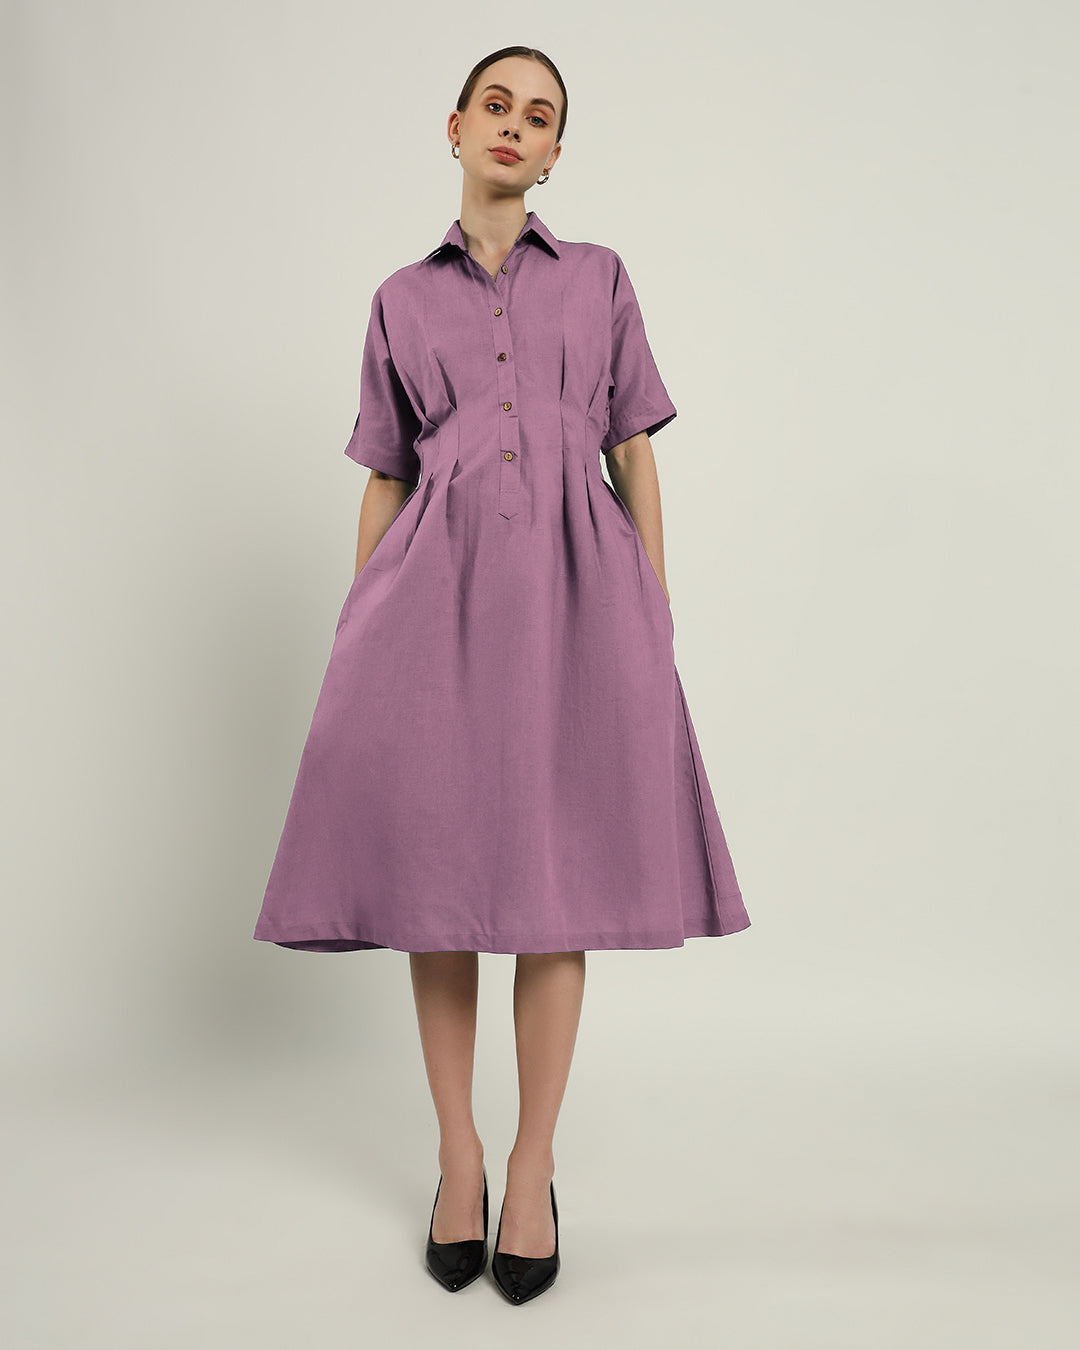 The Salford Purple Swirl Dress